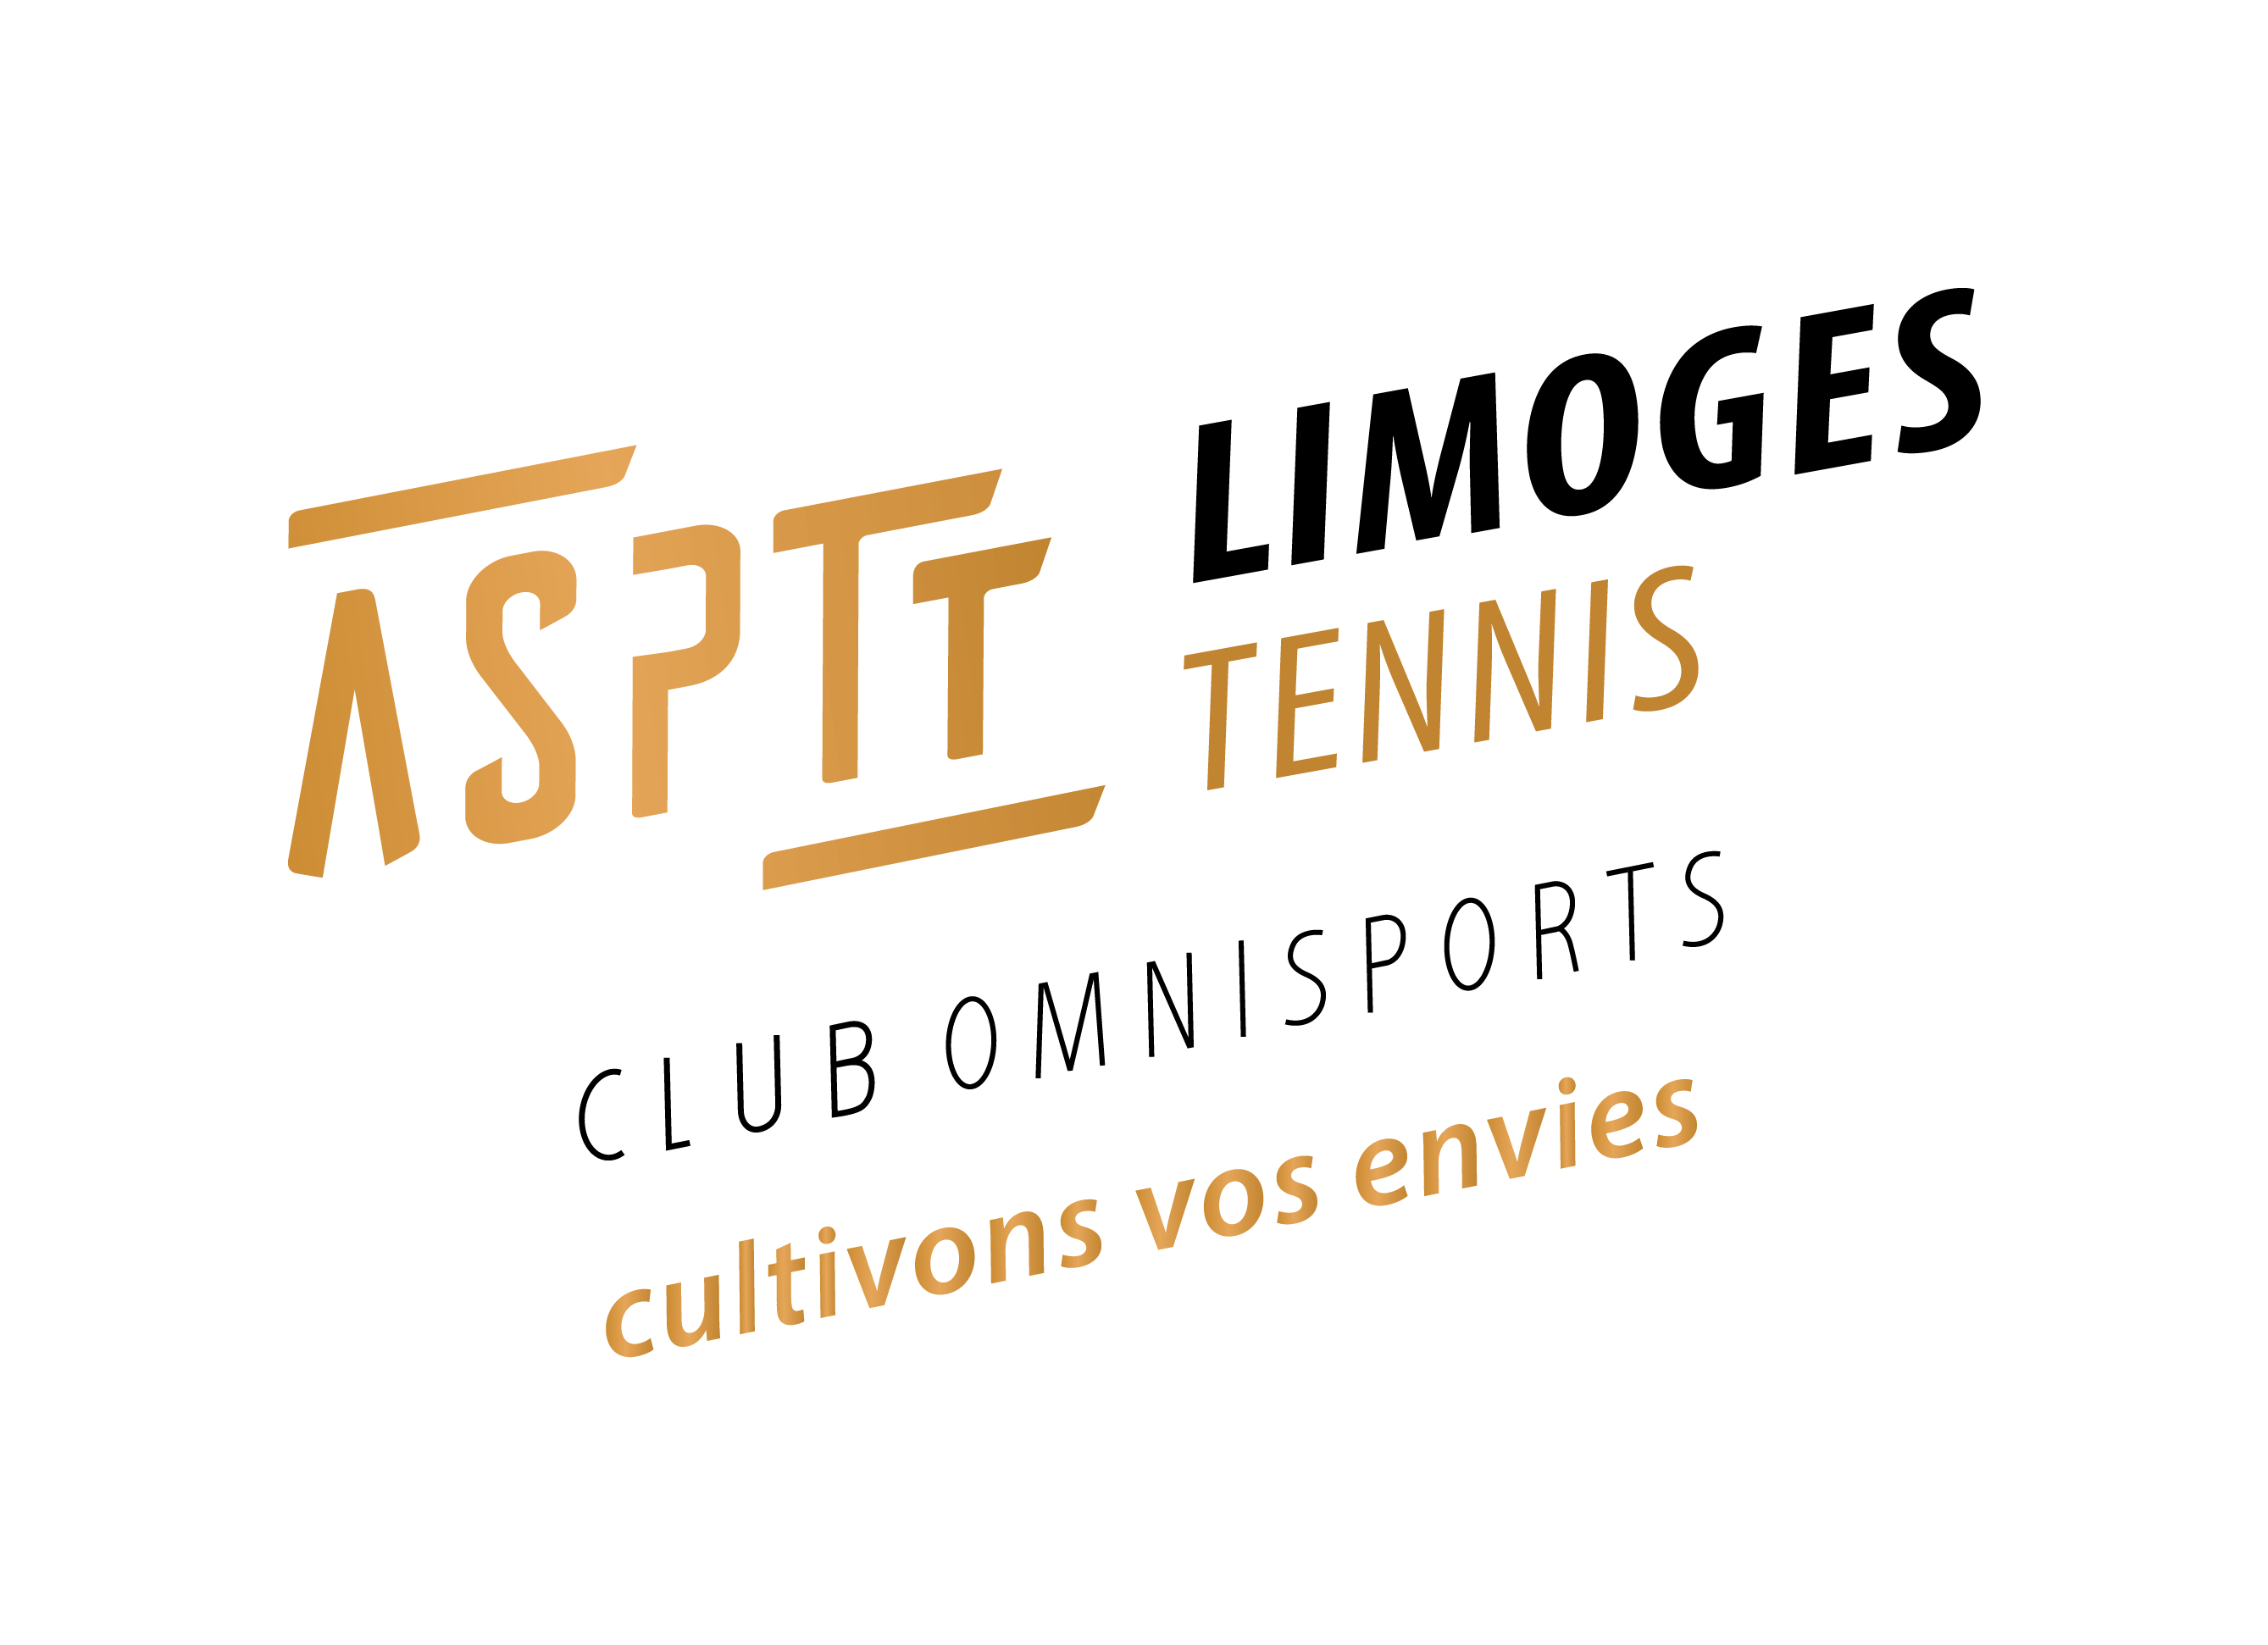 ASPTT Limoges Tennis